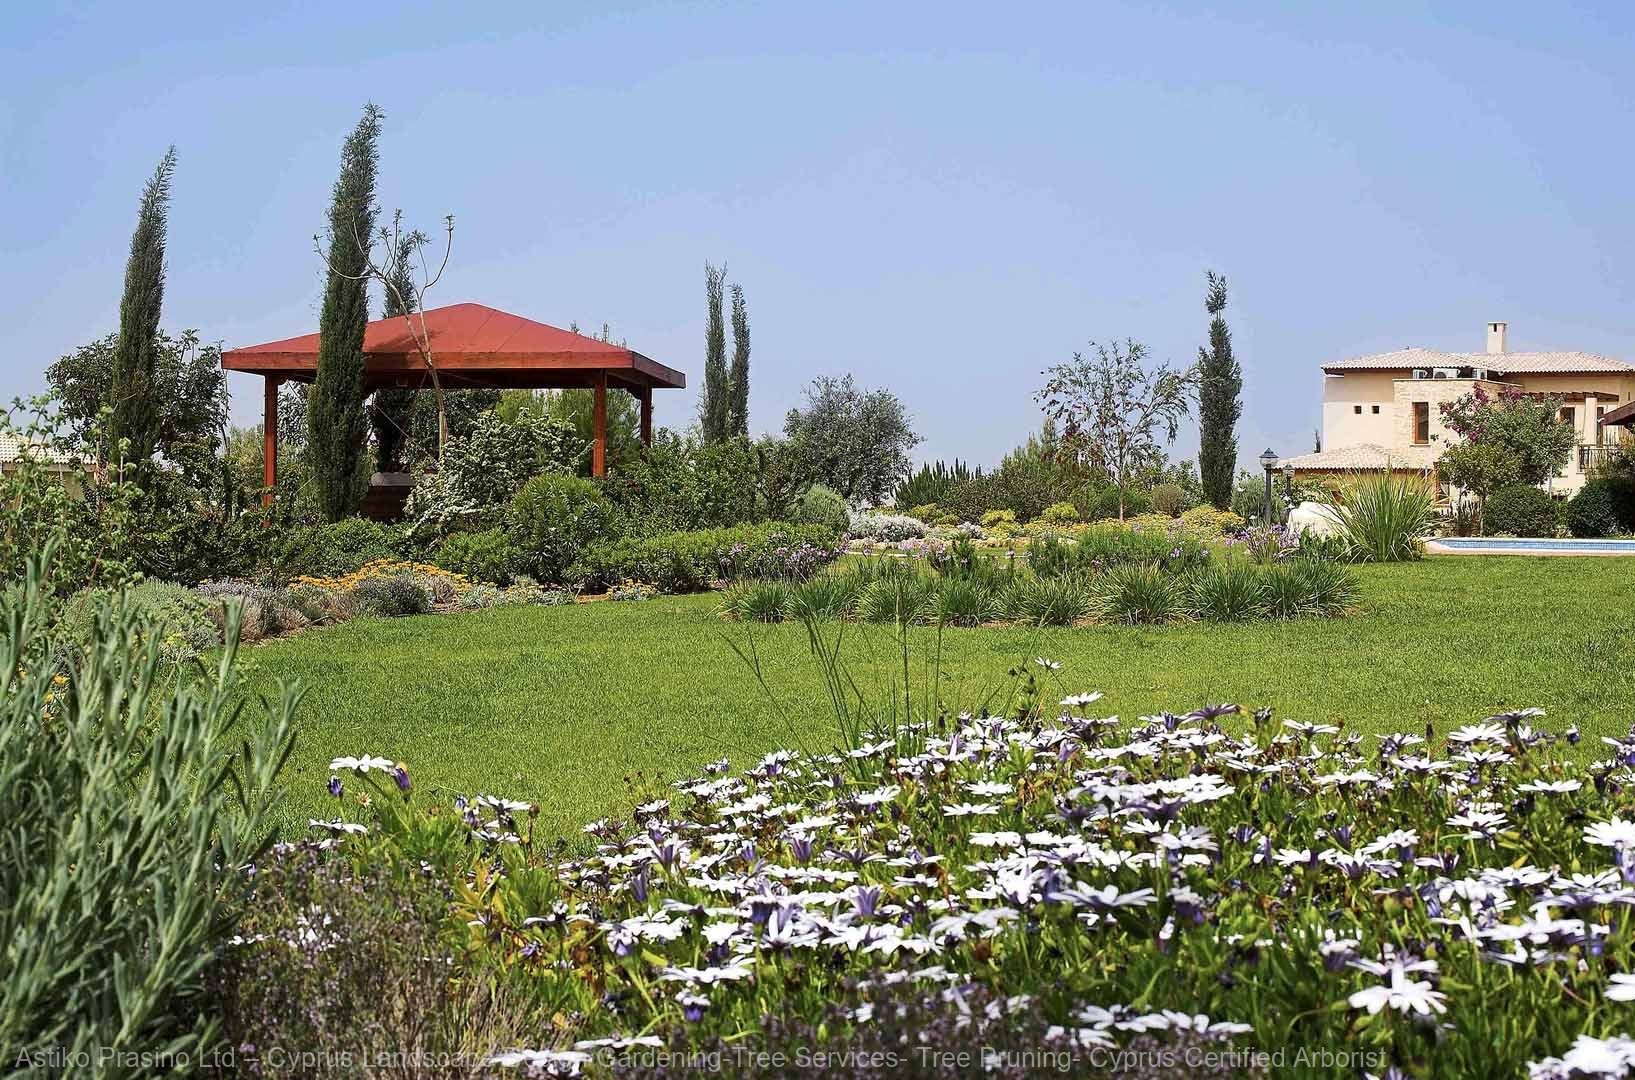 Astiko Prasino Ltd – Cyprus Landscape Design Gardening-Tree Services- Tree Pruning- Cyprus Certified Arborist